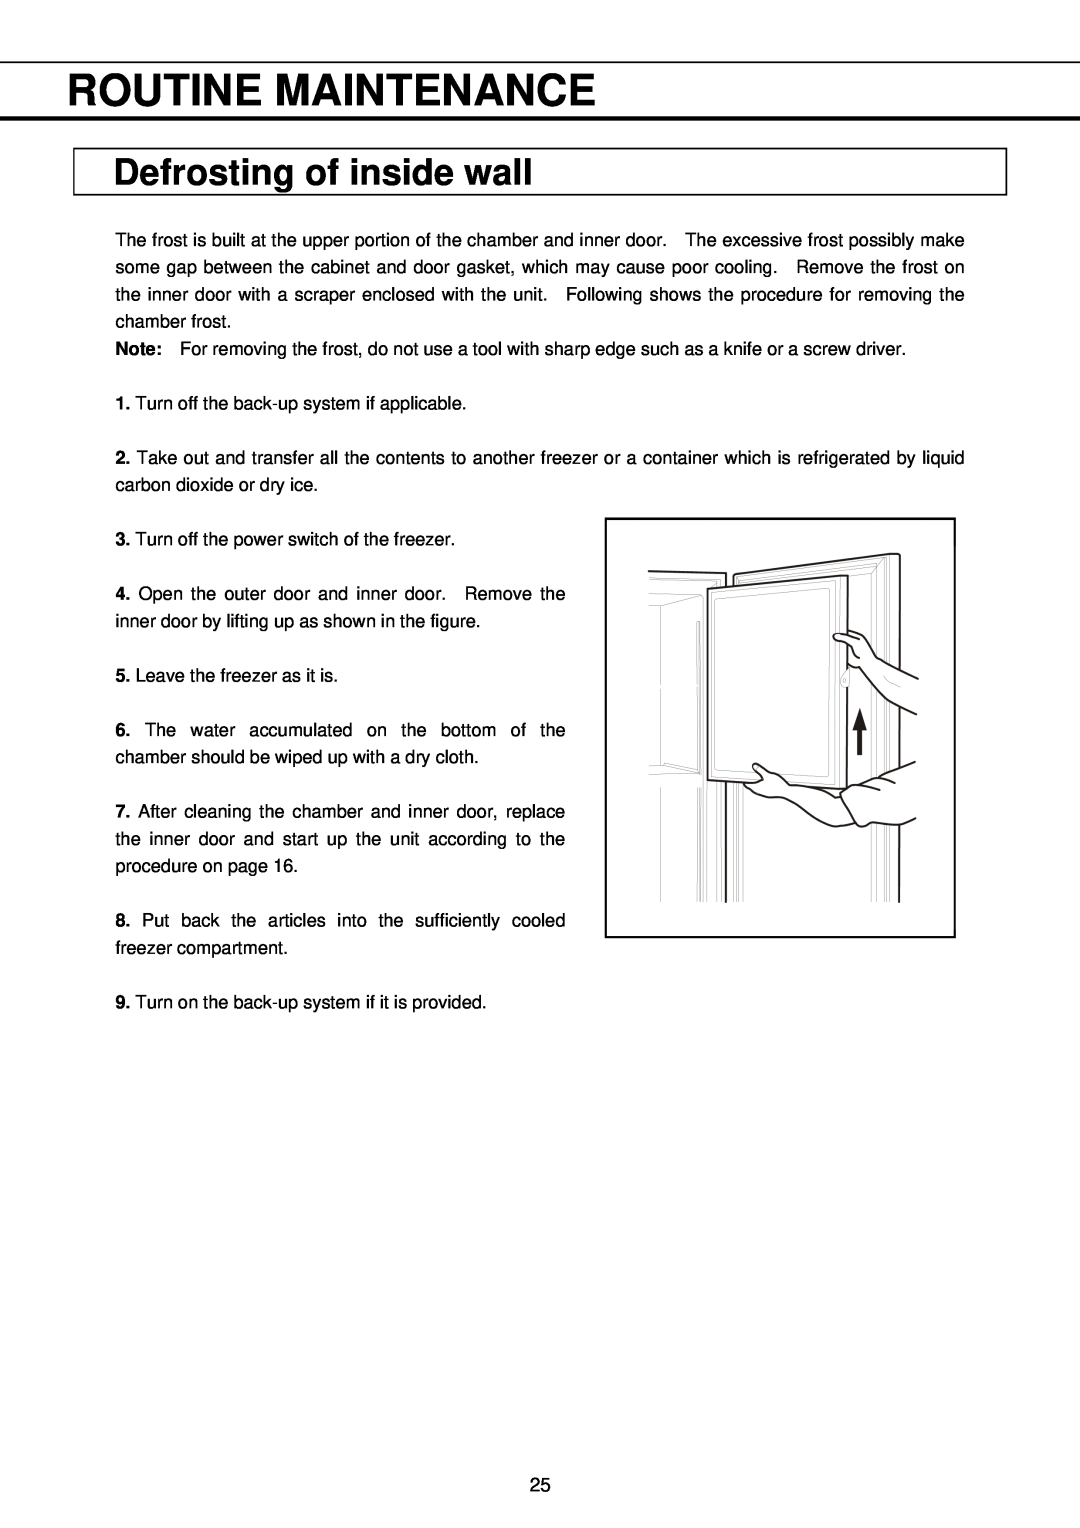 Sanyo MDF-U32V instruction manual Defrosting of inside wall, Routine Maintenance 